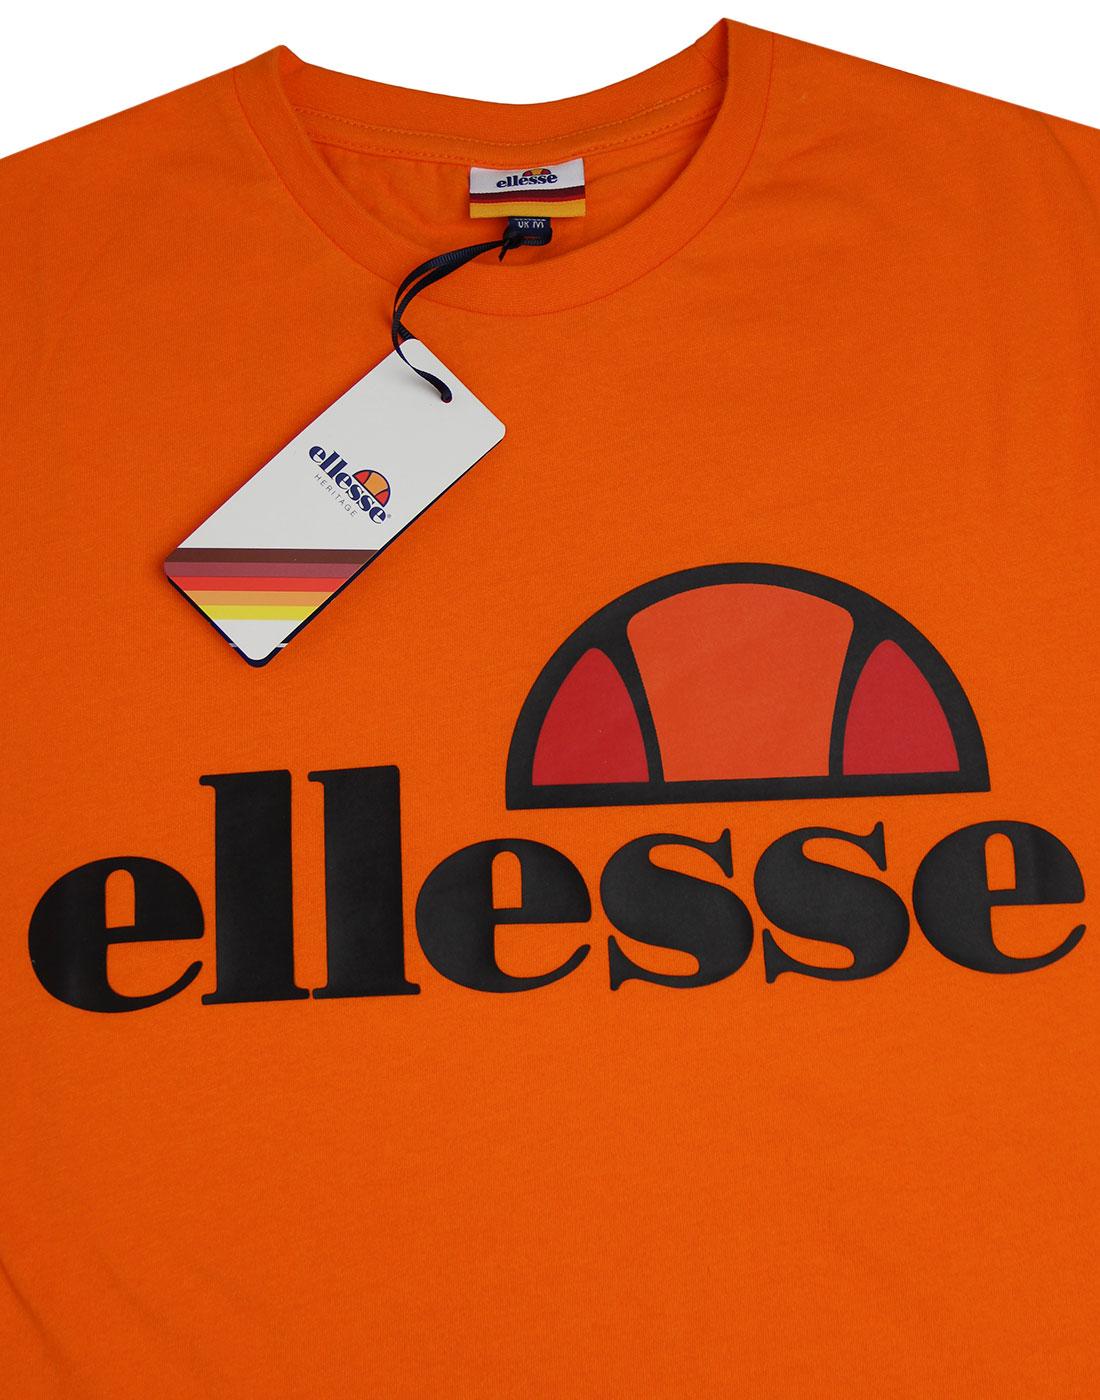 ELLESSE Prado Men's Retro 1980s Logo T-shirt in Orange